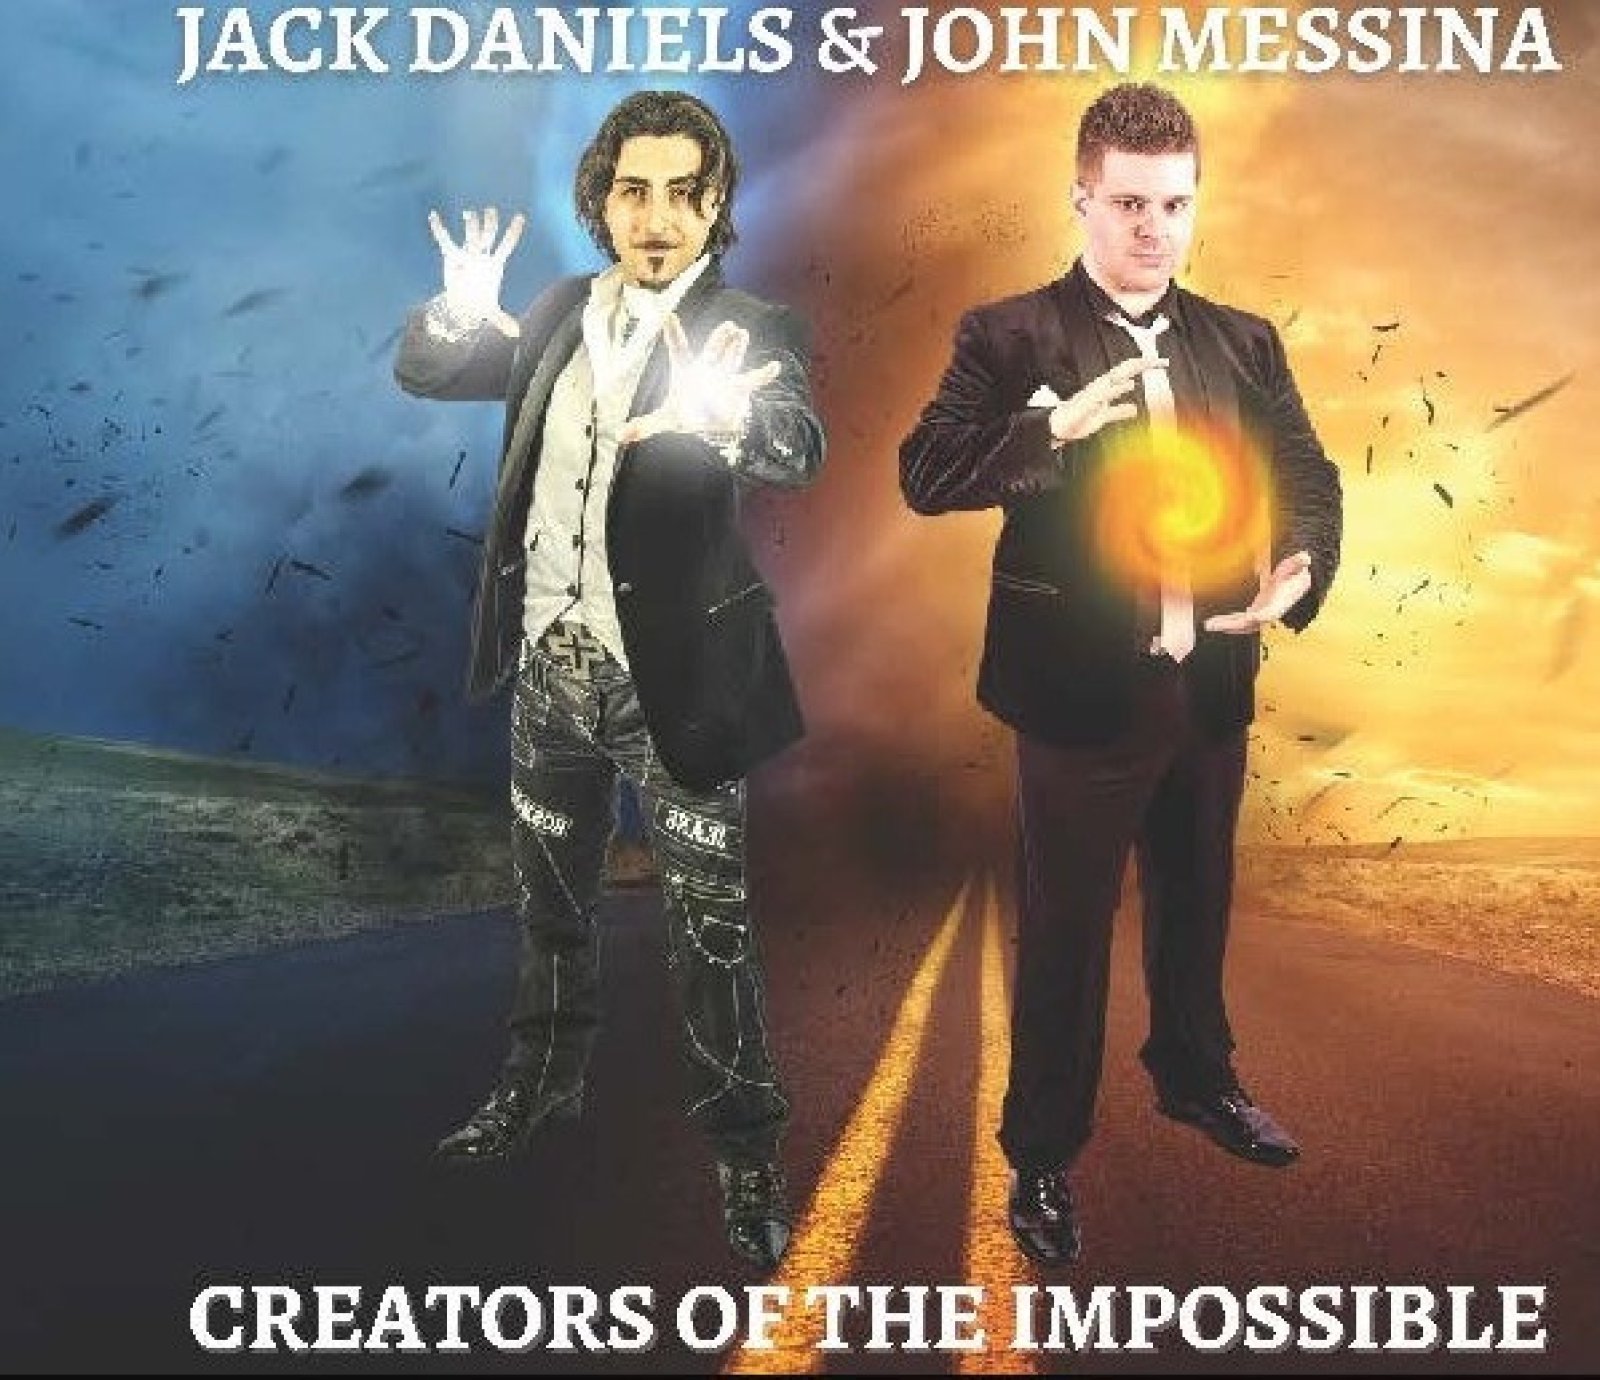 Jack Daniels and John Messina